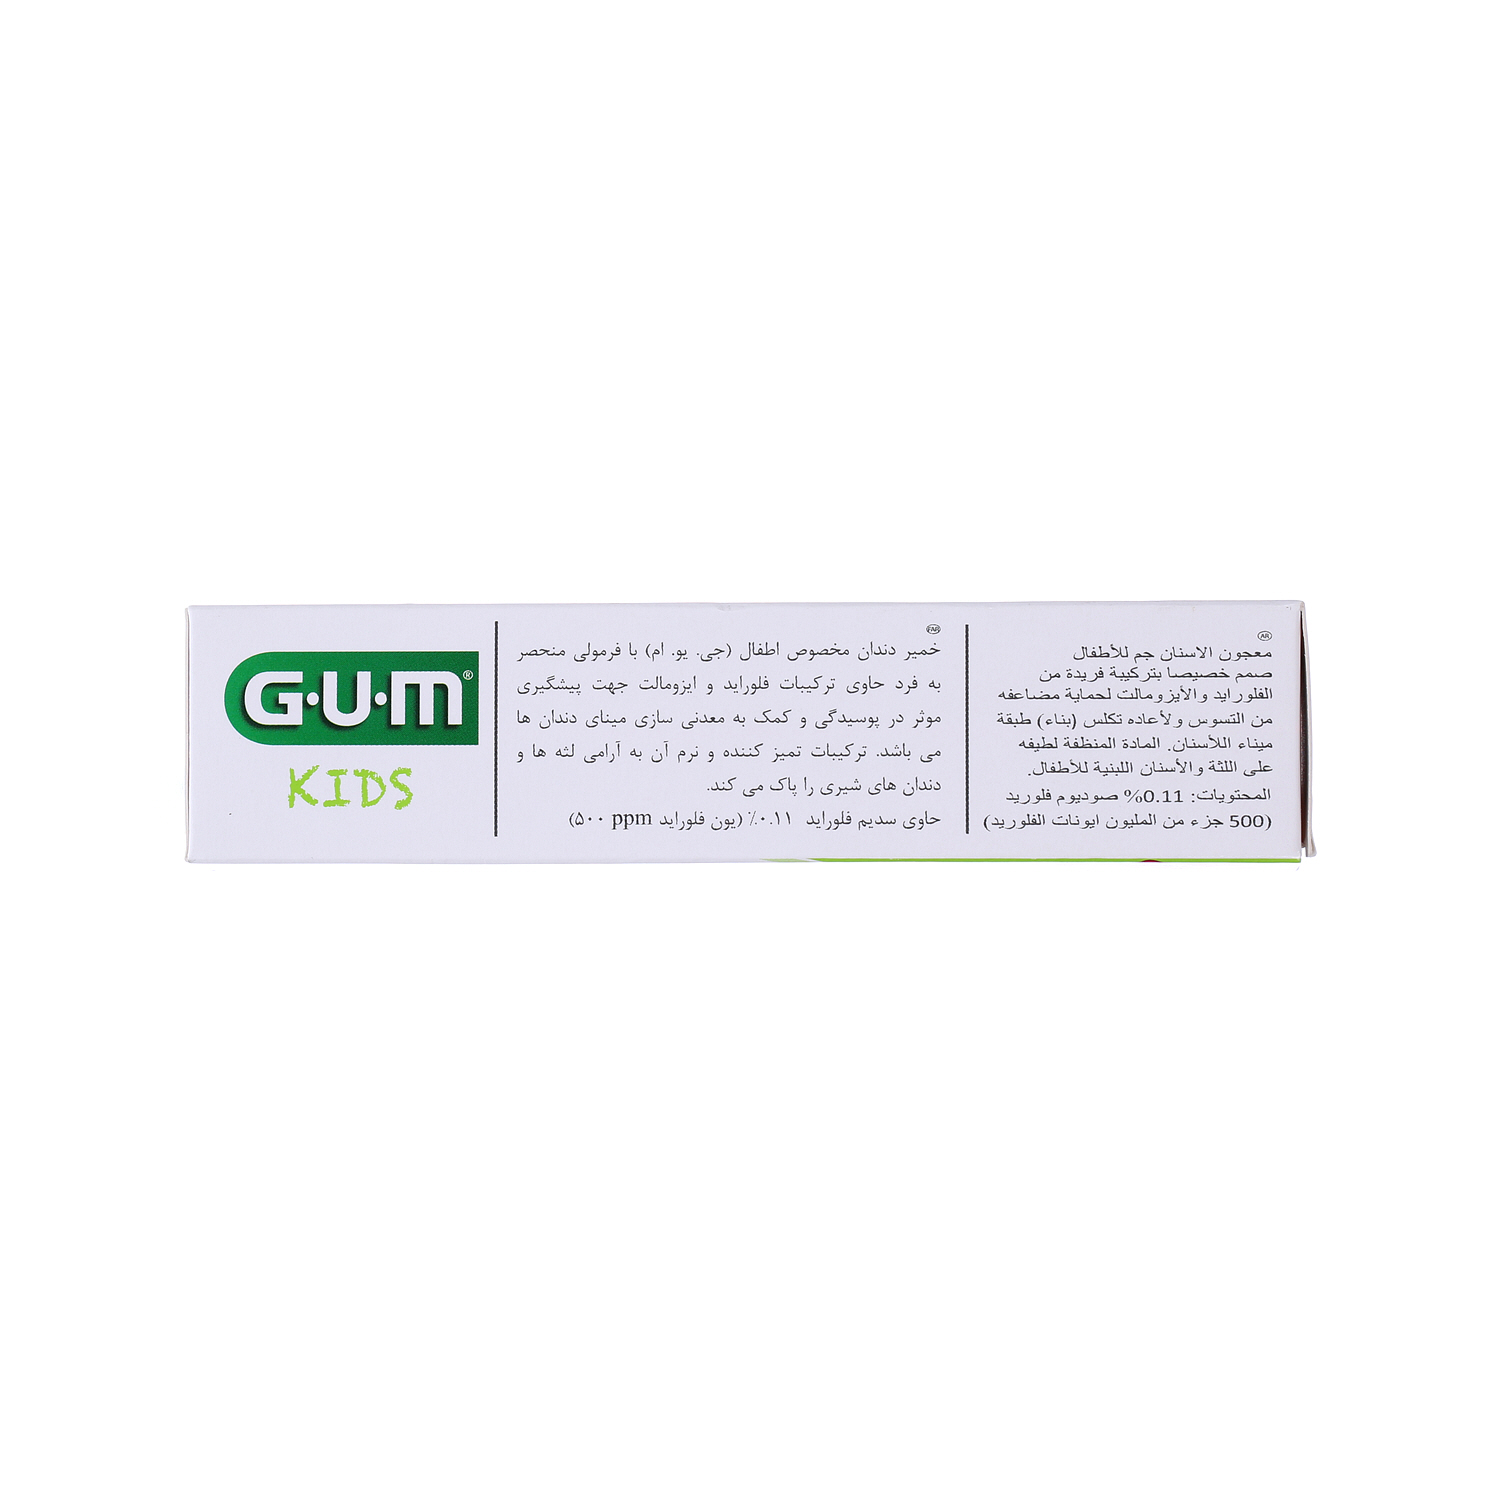 Gum Kids Toothpaste 2-6 Years